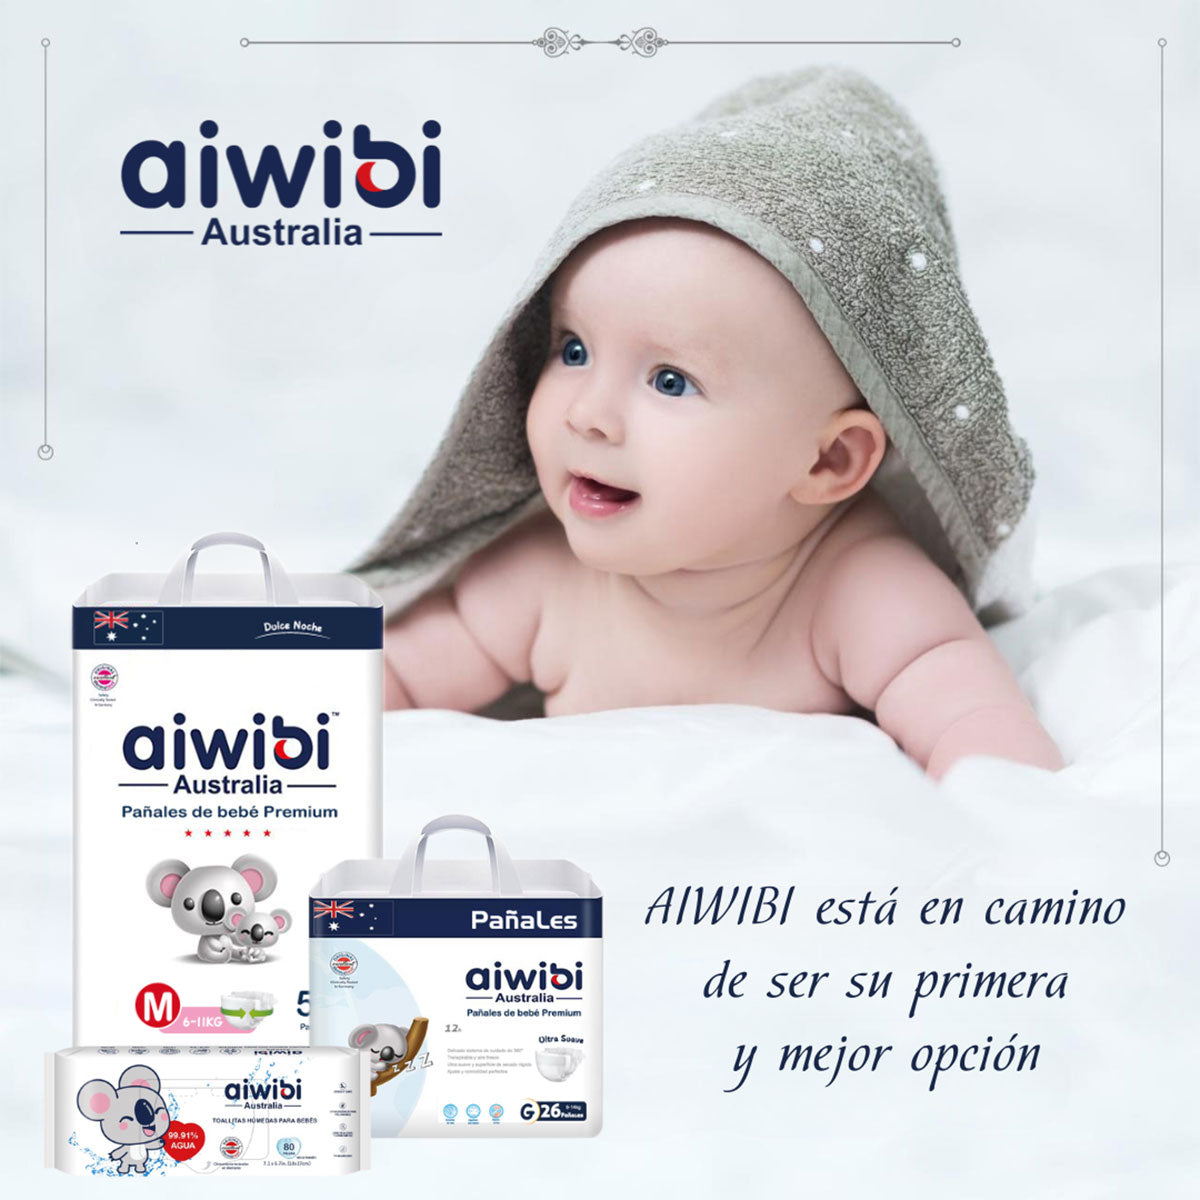 Pañales Aiwibi Premium Dulce Noche XG (42 unidades) - 🇦🇺 Producto Australiano